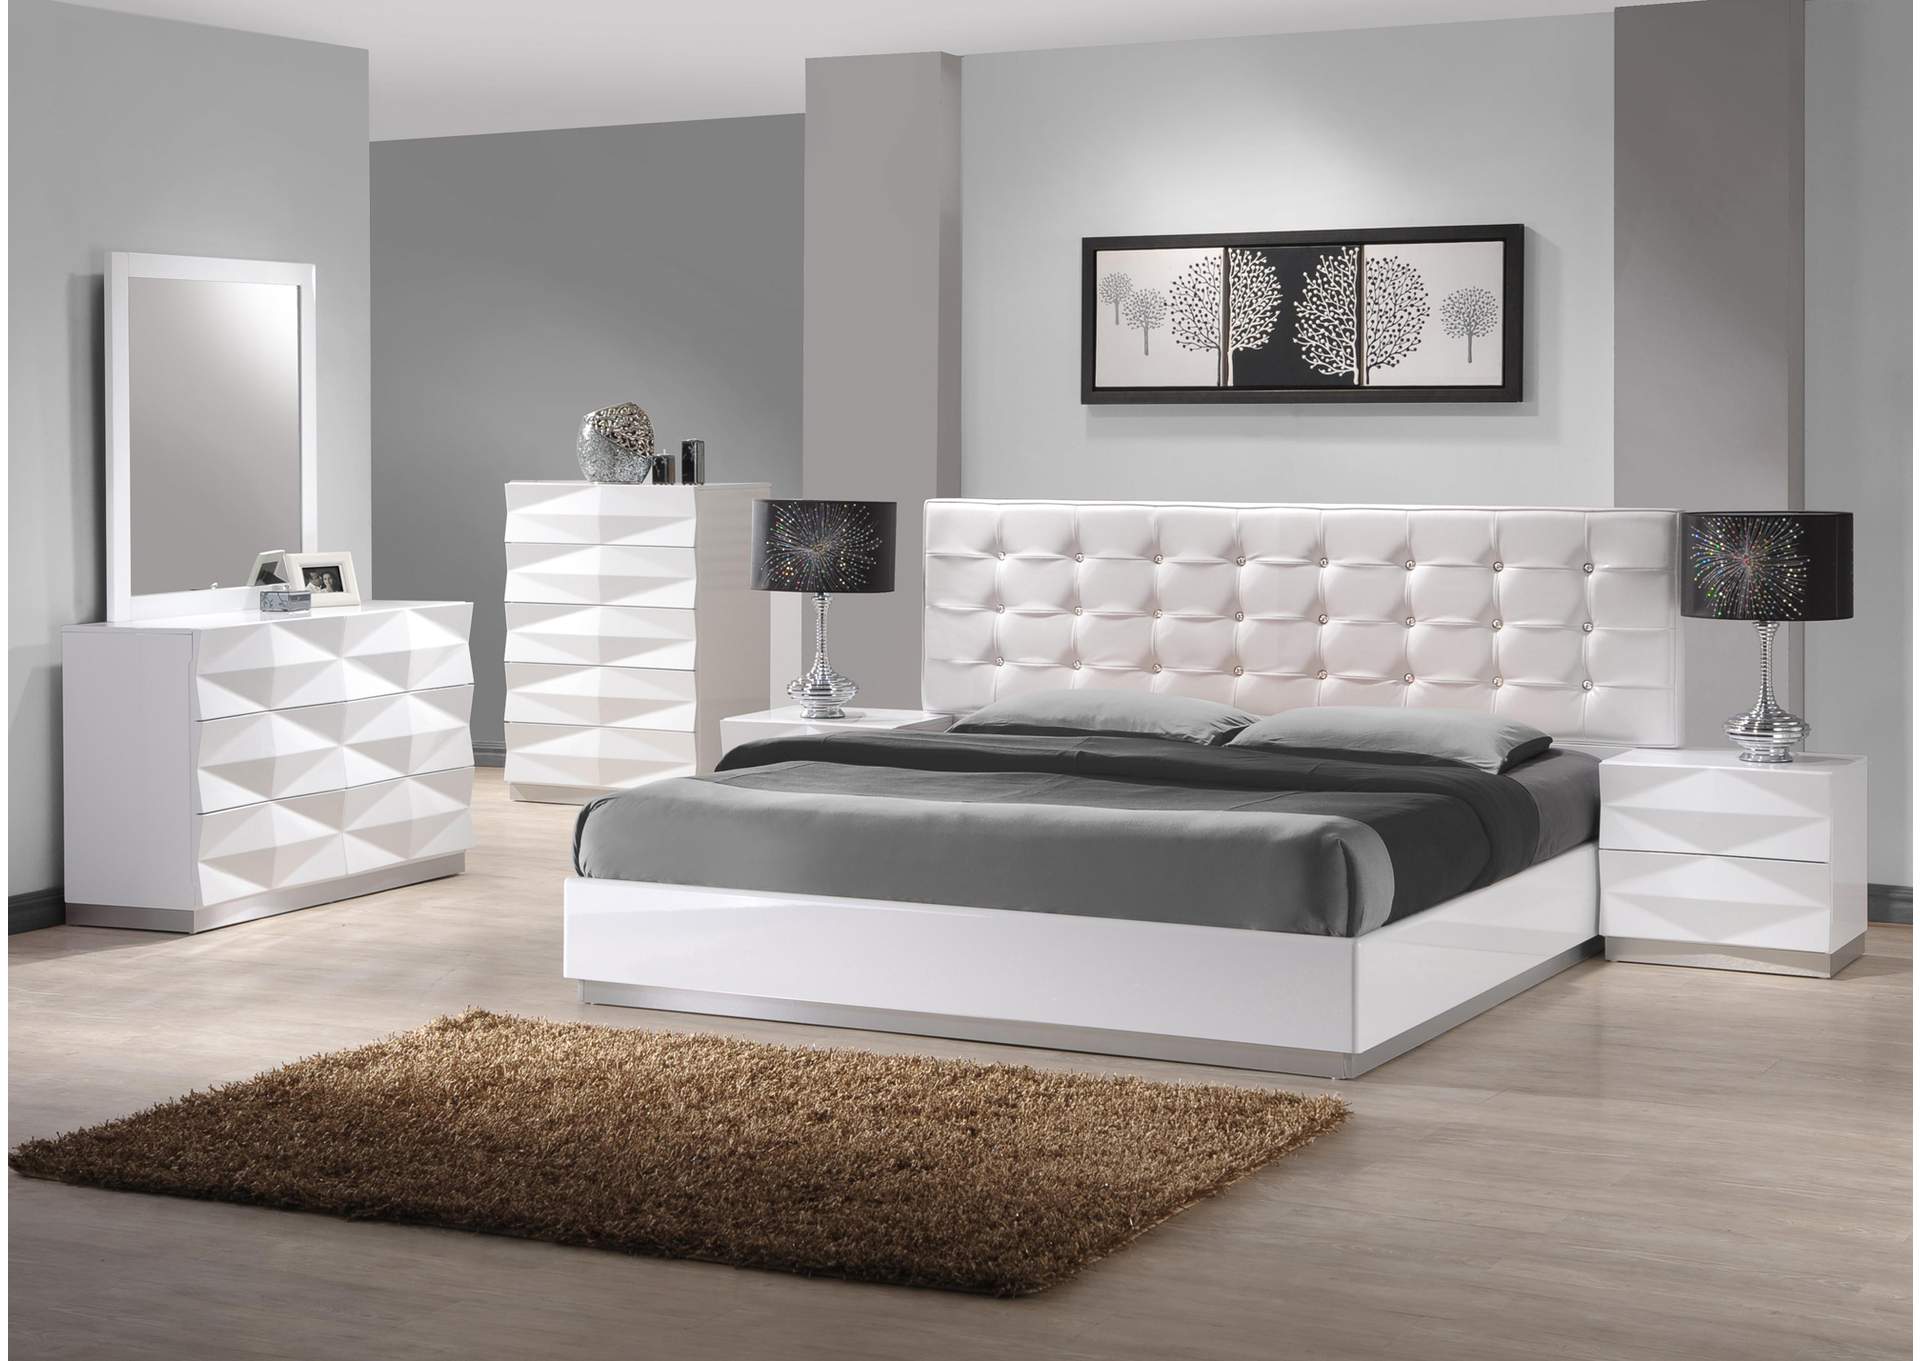 Verona Full Size Bed,J&M Furniture